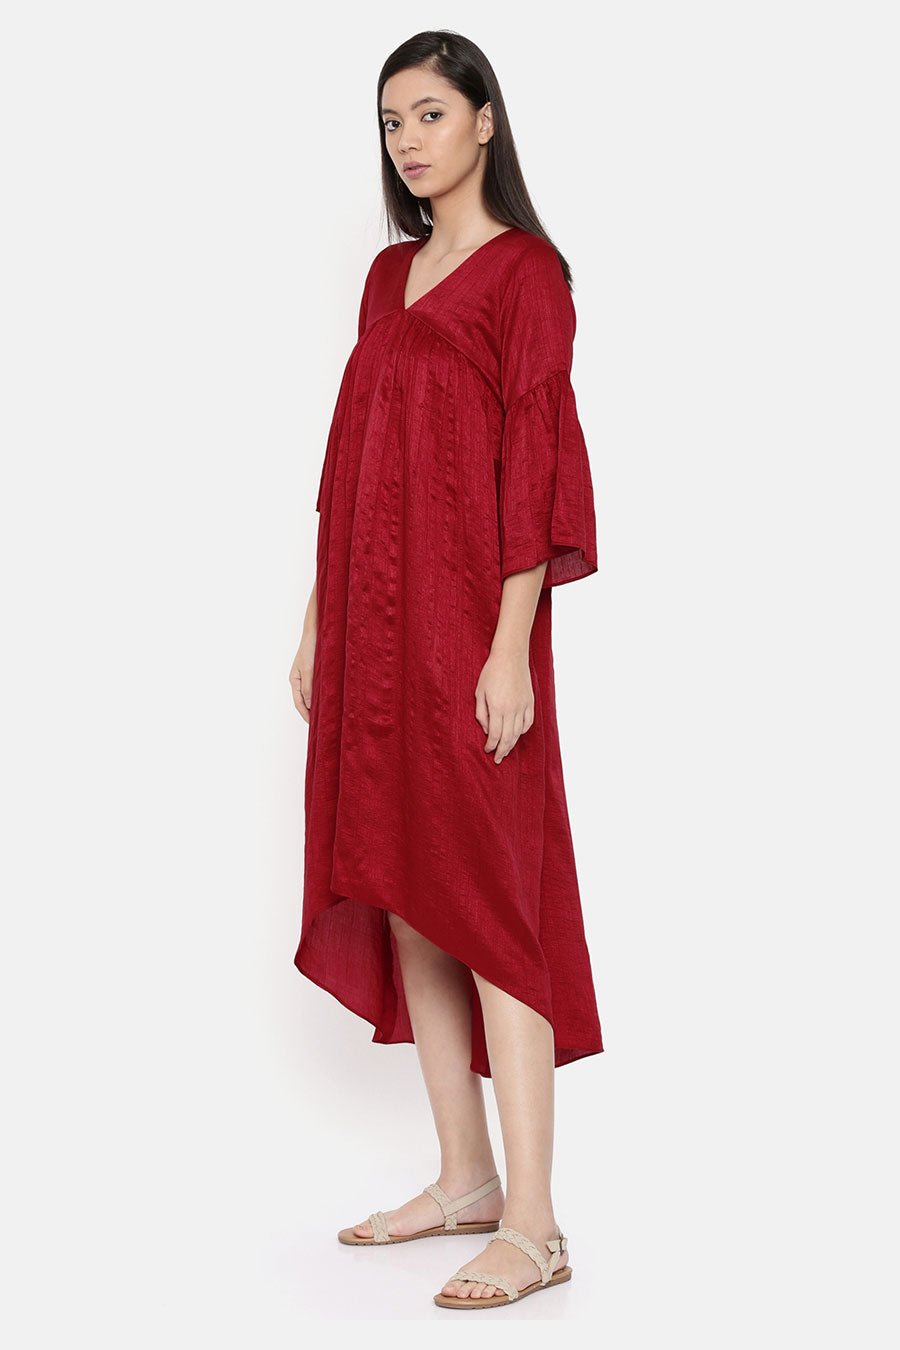 Red Asymmetric Gathered Dress